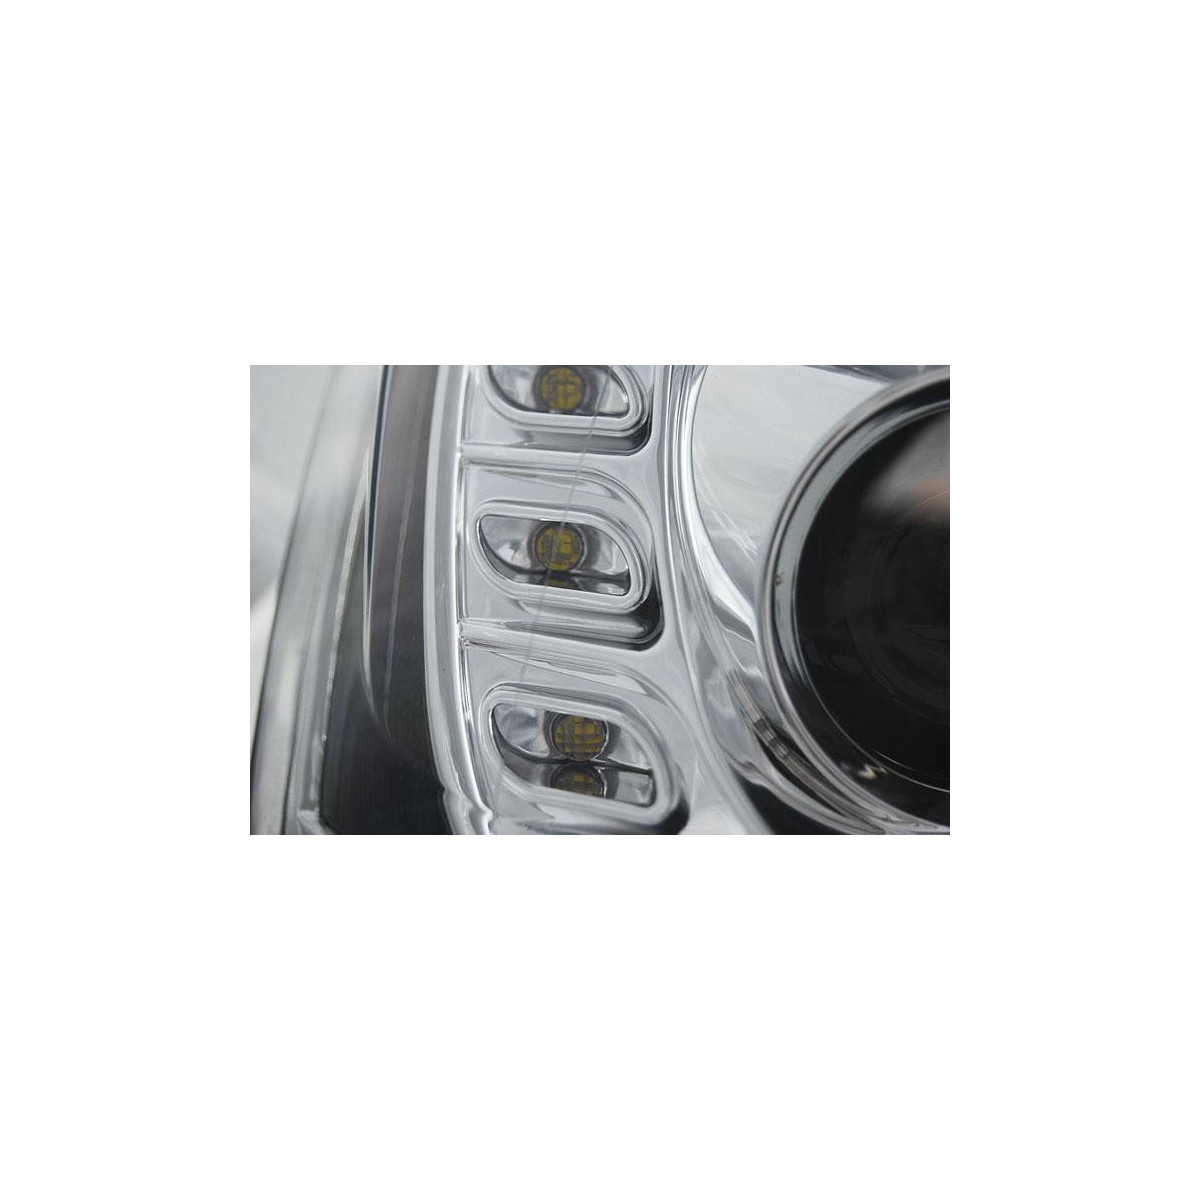 LAMPY VW JETTA 6 01/11- CHROME TUBE LIGHT LED DRL